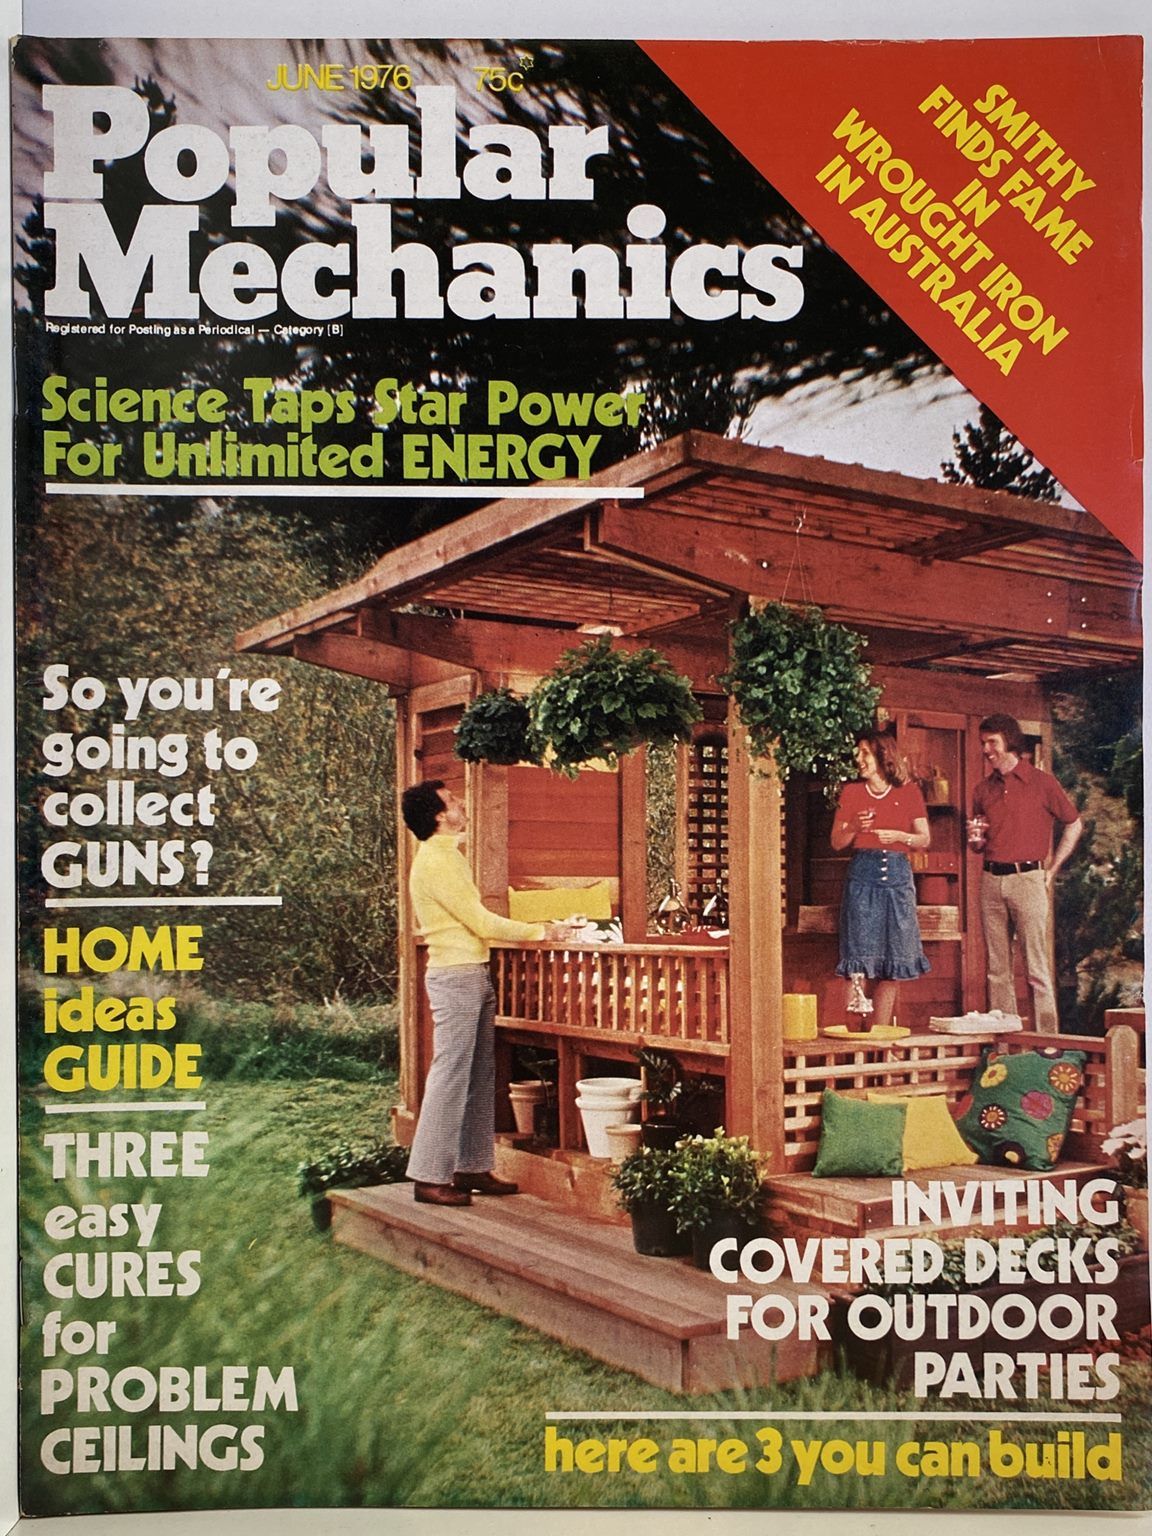 VINTAGE MAGAZINE: Popular Mechanics - Vol. 145, No. 5 - June 1976